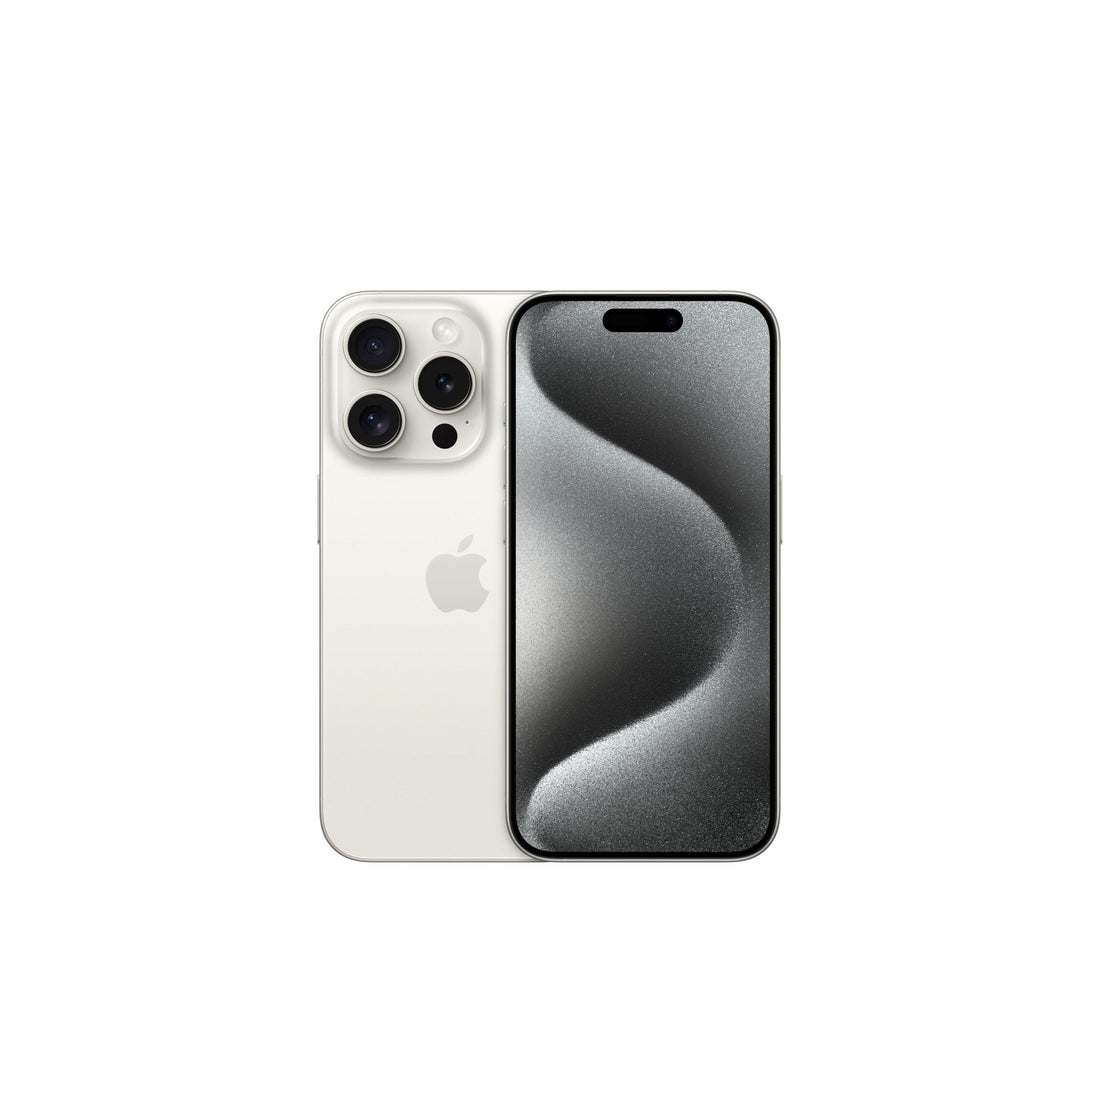 Apple iPhone 15 Pro (128 GB) - Titanio bianco-iStoreMilano